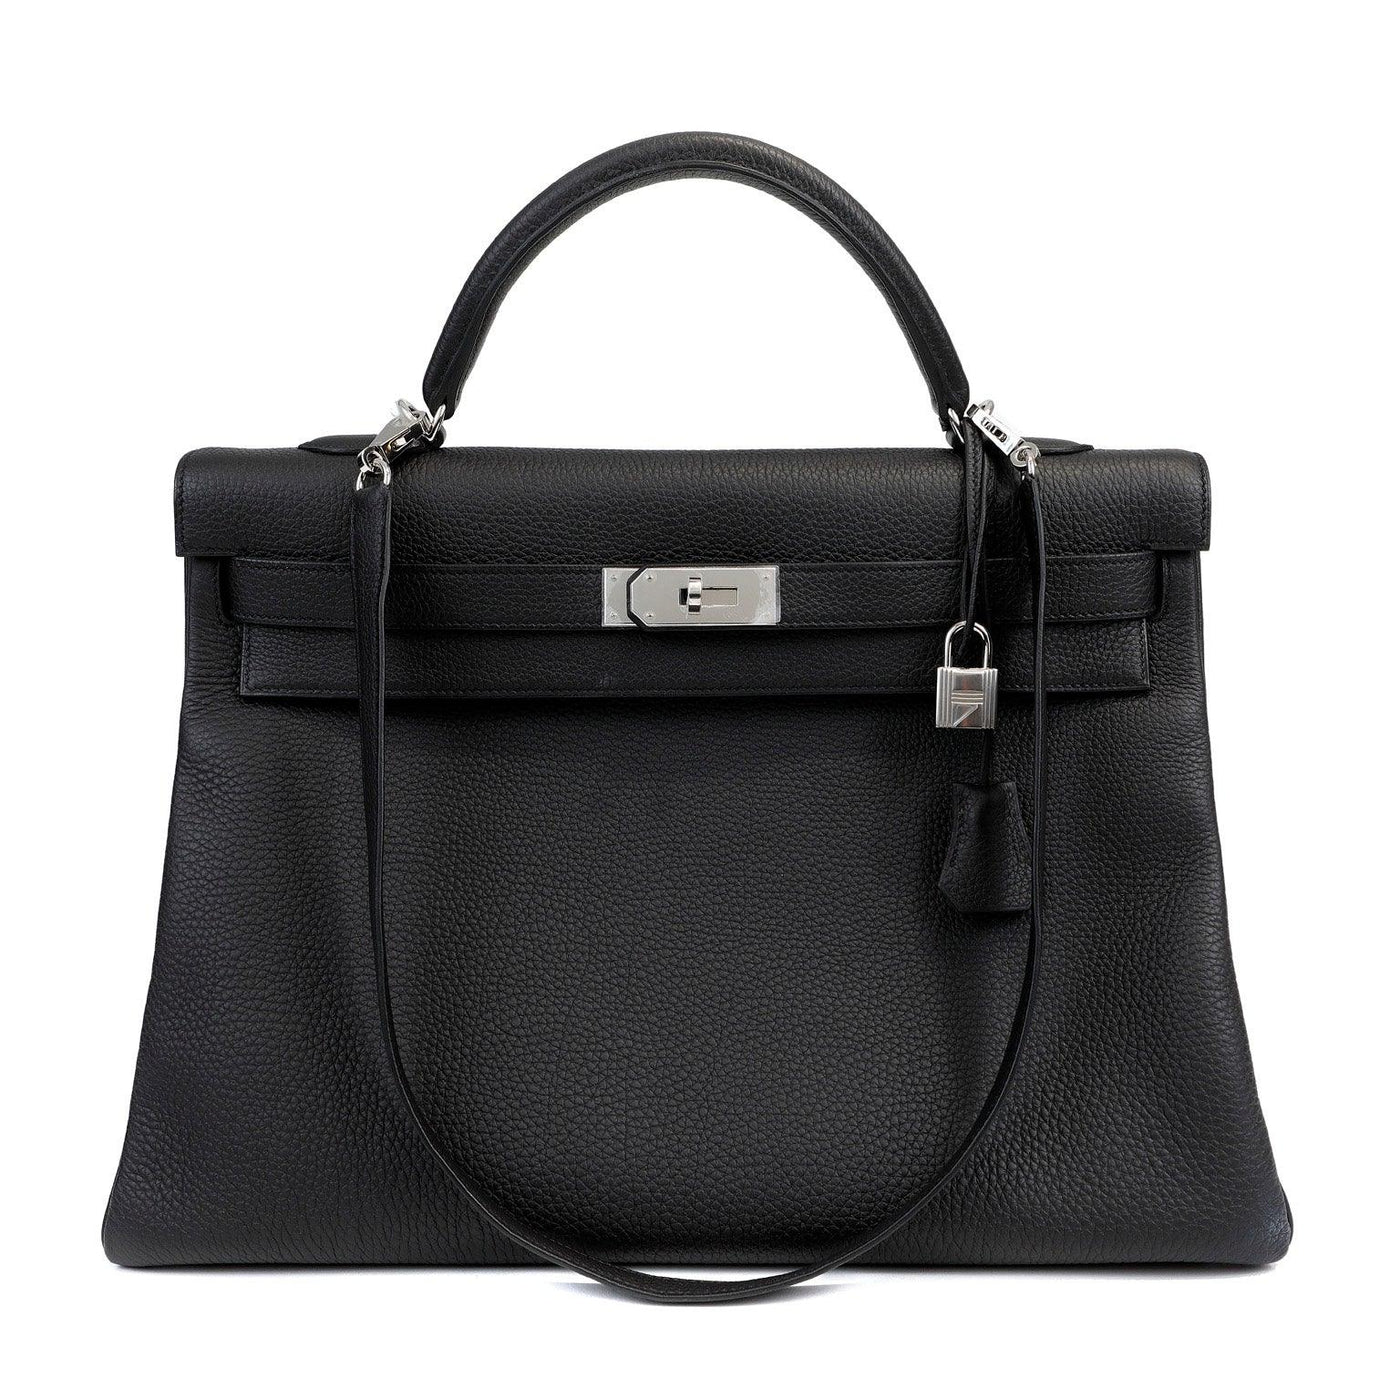 Hermès 40cm Black Togo Kelly with Palladium Hardware - Only Authentics